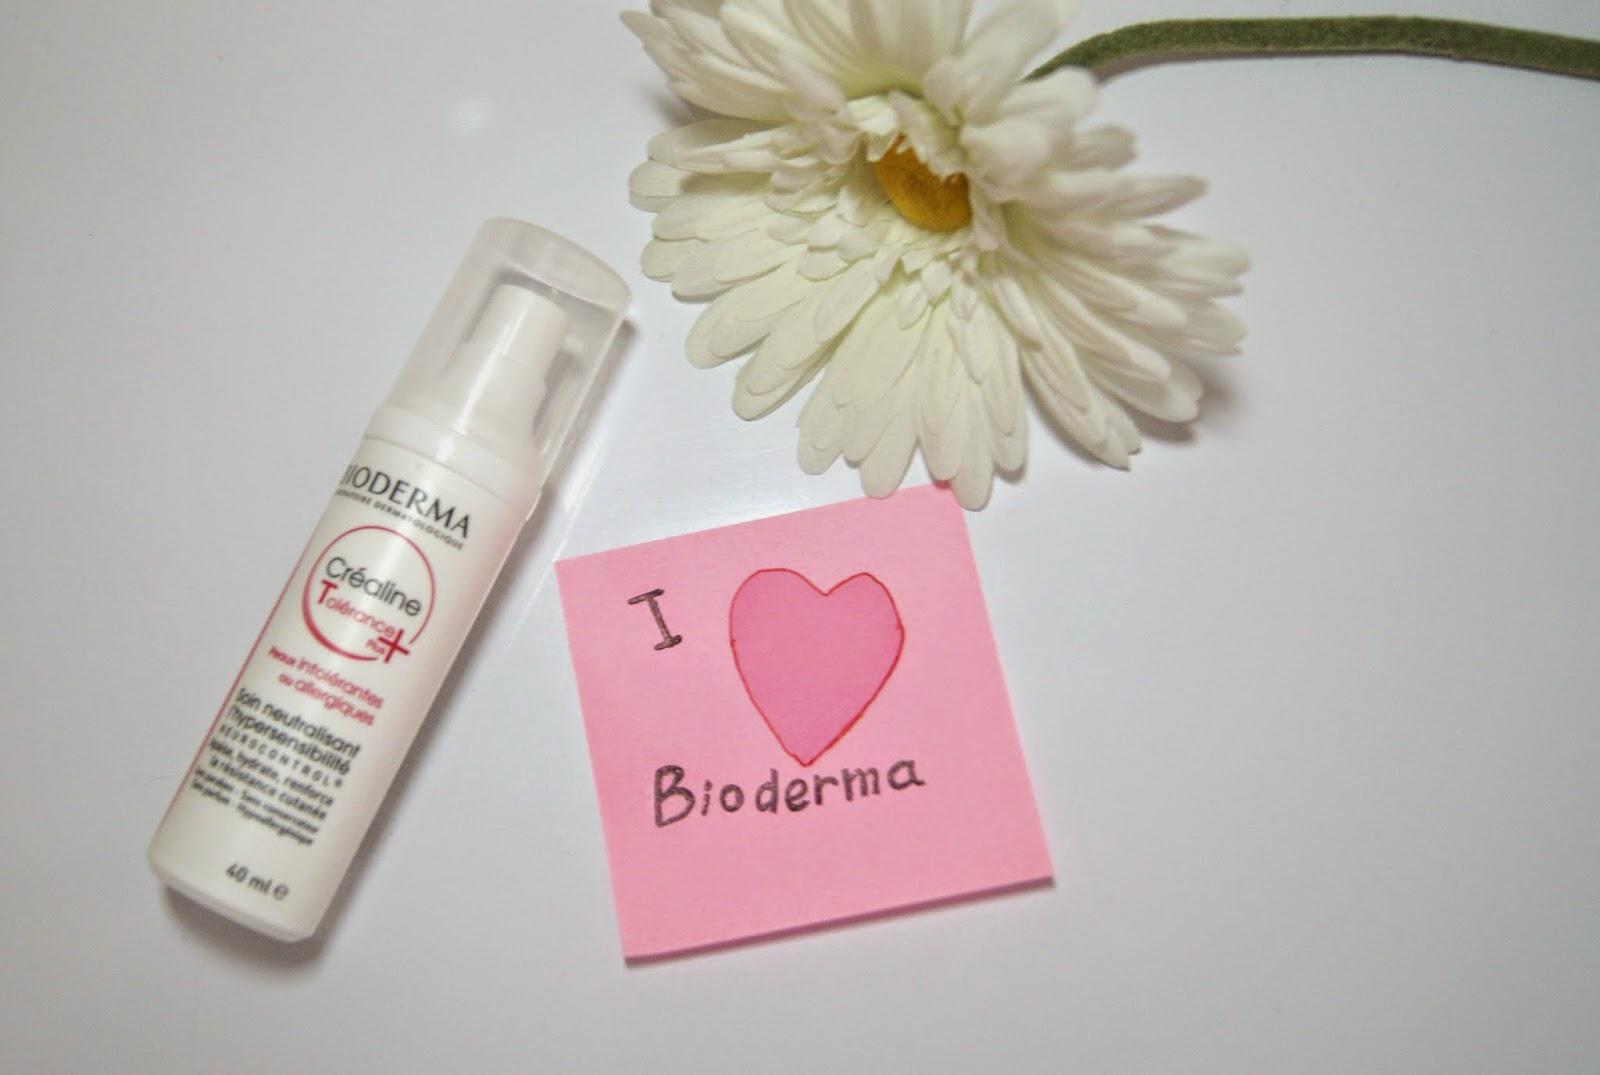 Bioderma a sauvé ma peau